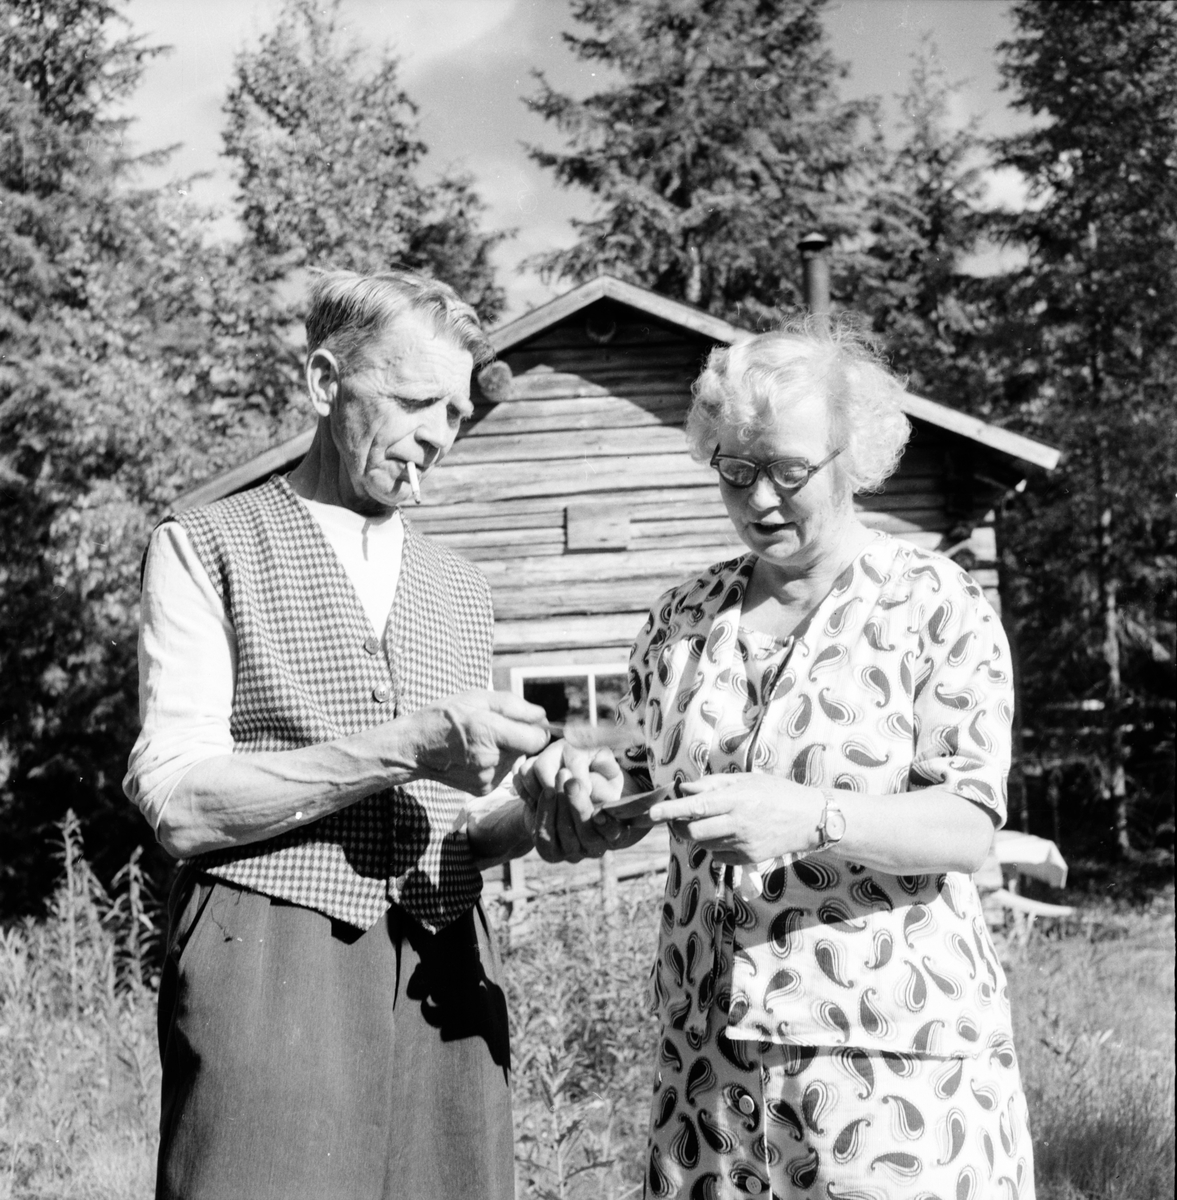 Lindin Ester,
Stuga,
Vallåsen,
2 Juli 1956